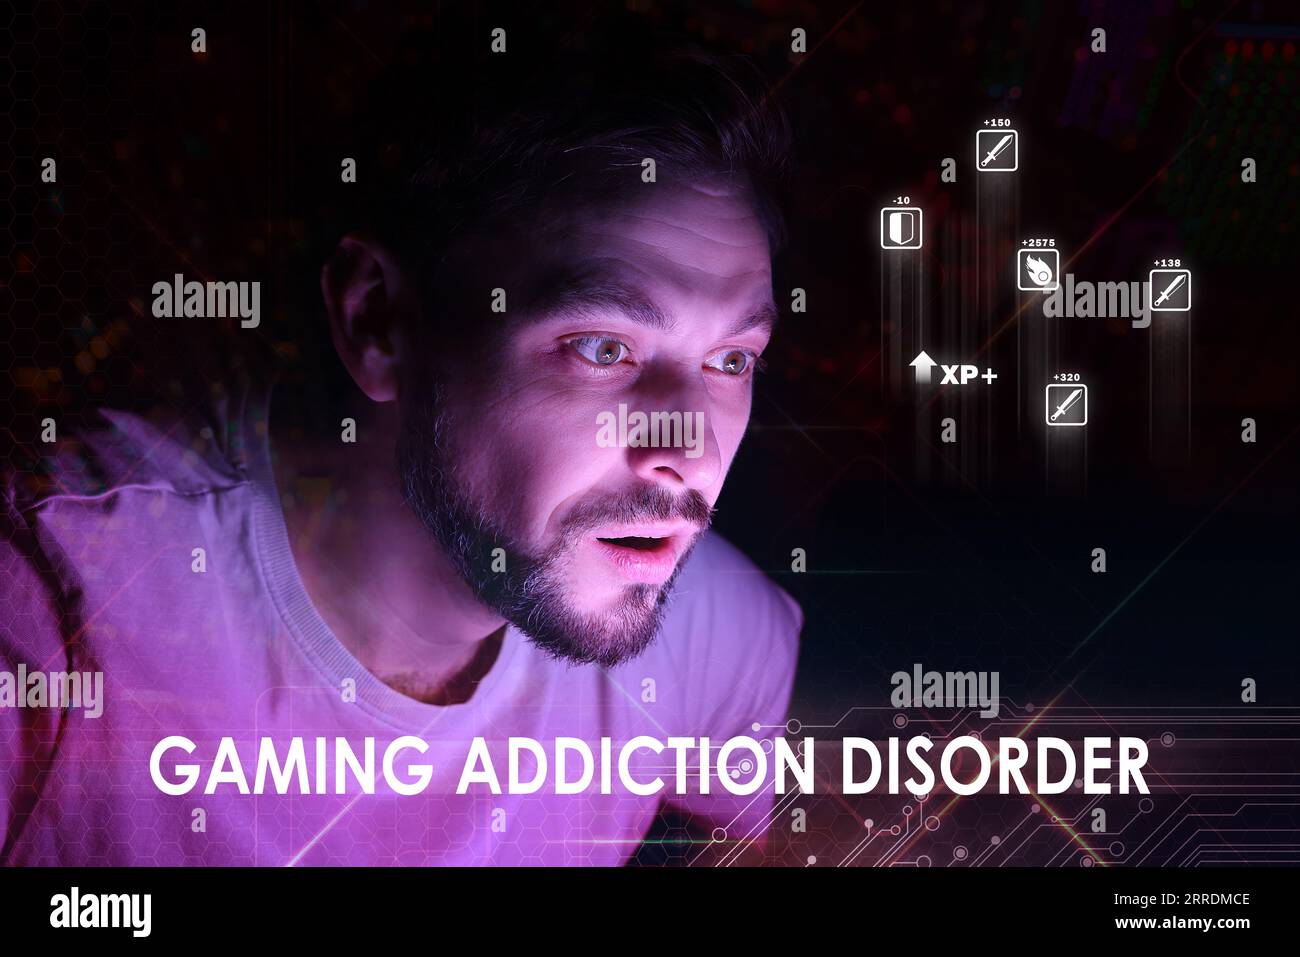 Gaming addiction disorder. Man using computer at night. Game icons and circuit board pattern Stock Photo